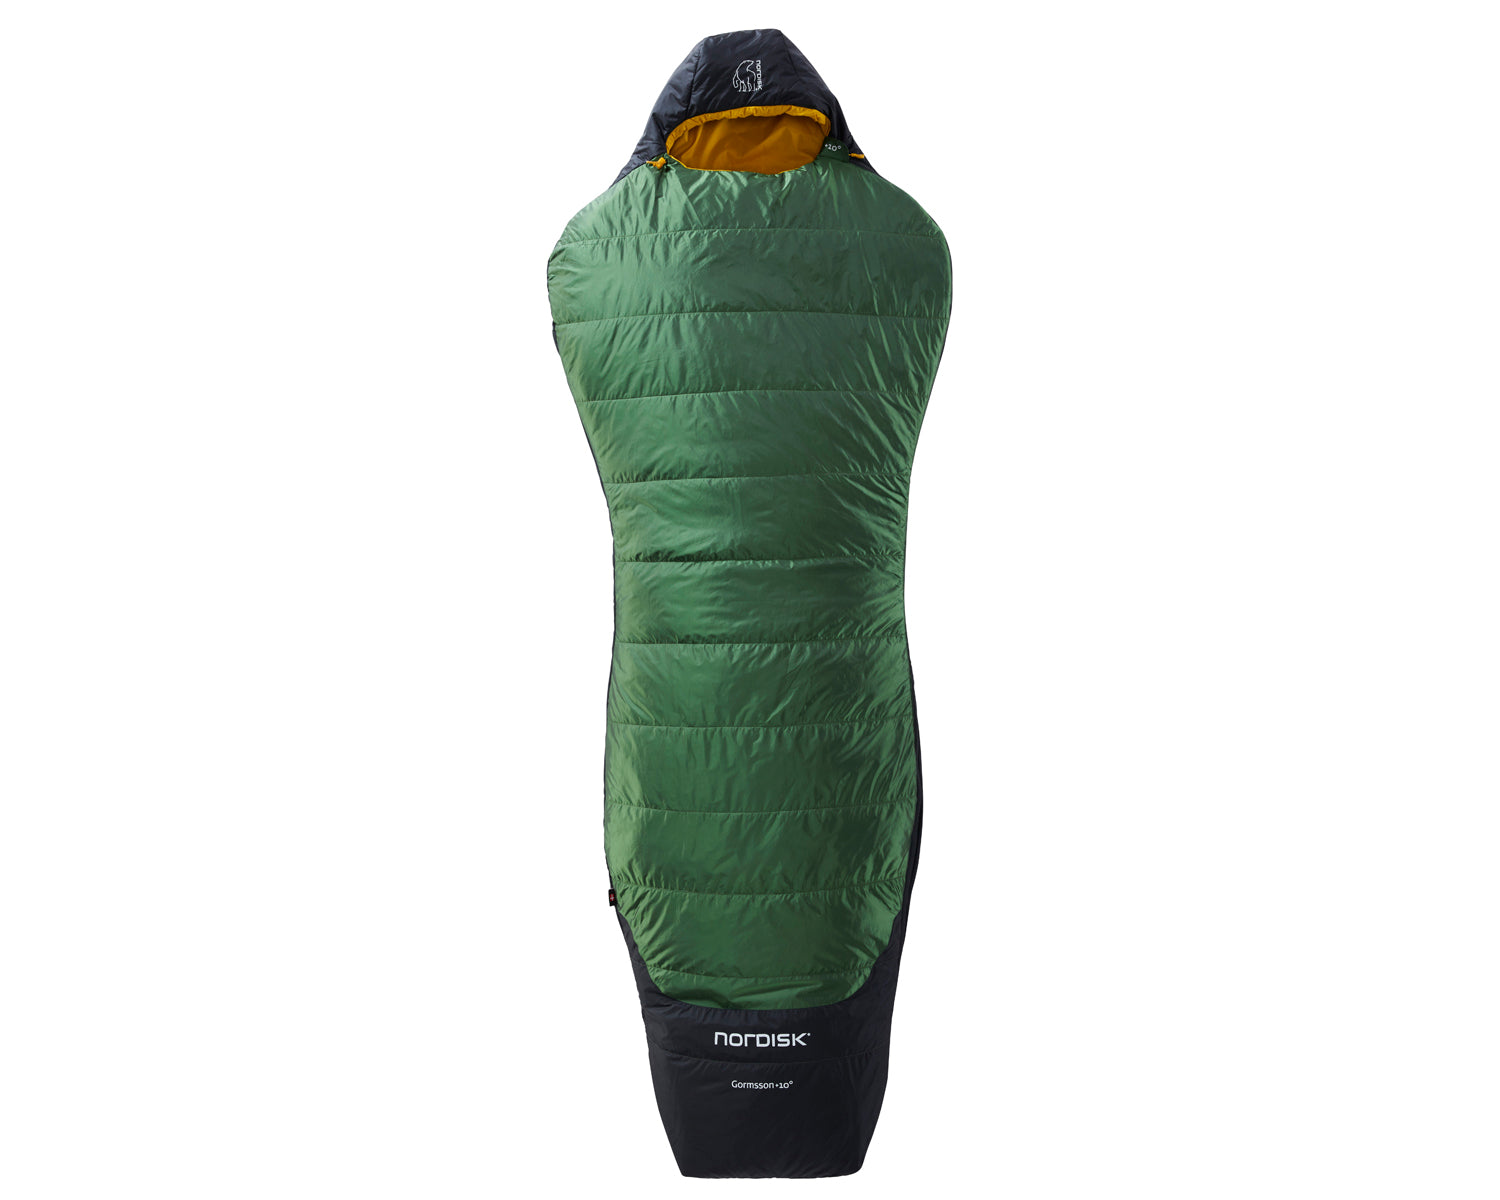 Gormsson +10° Curve sleeping bag - Artichoke Green/Mustard Yellow/Black